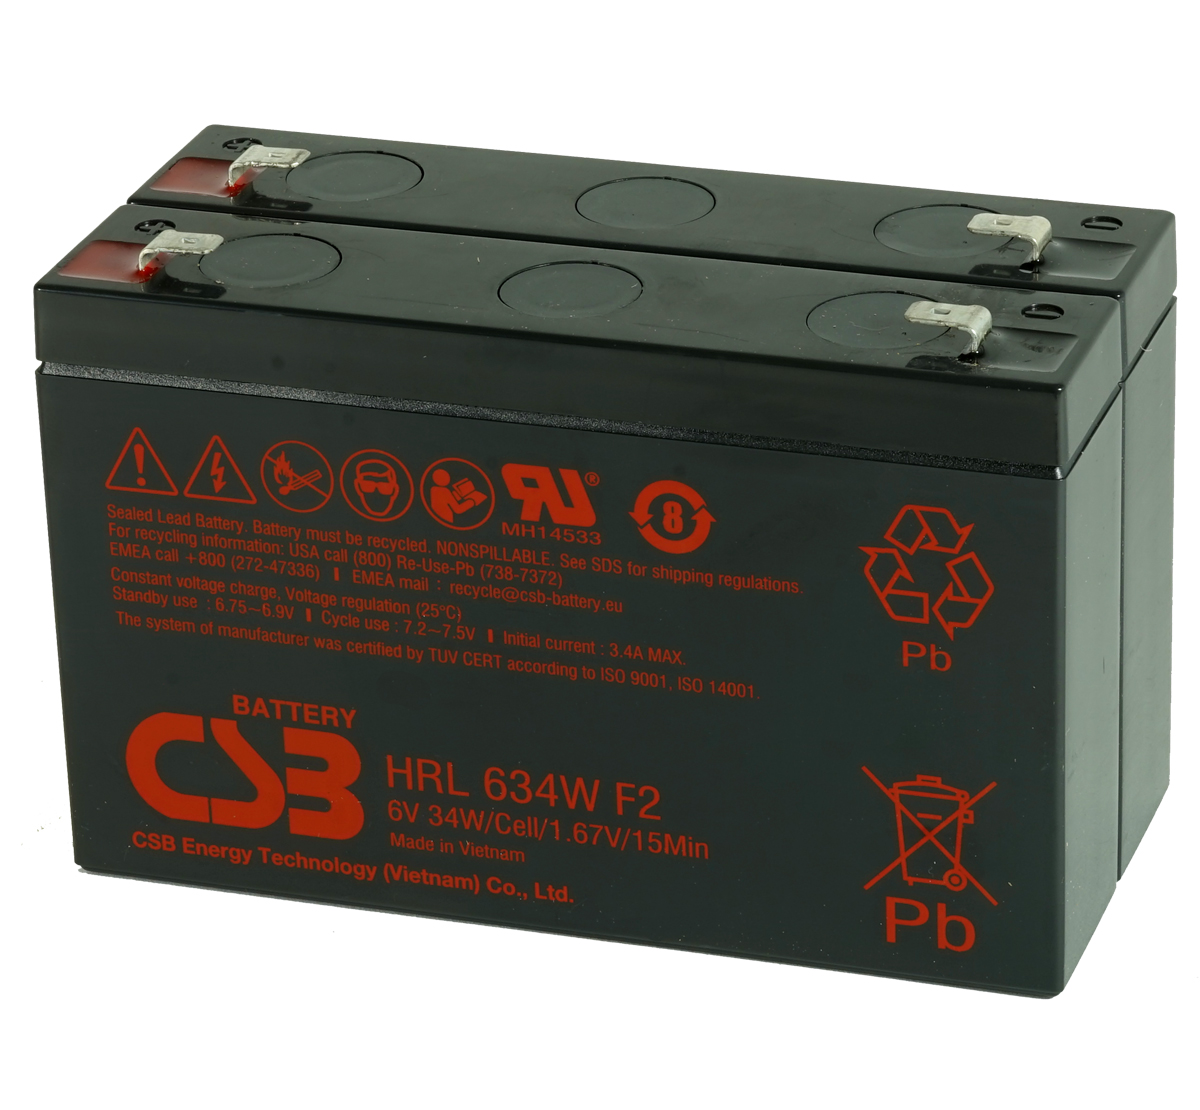 MDS68771 UPS Battery Kit for MGE / Eaton UPS